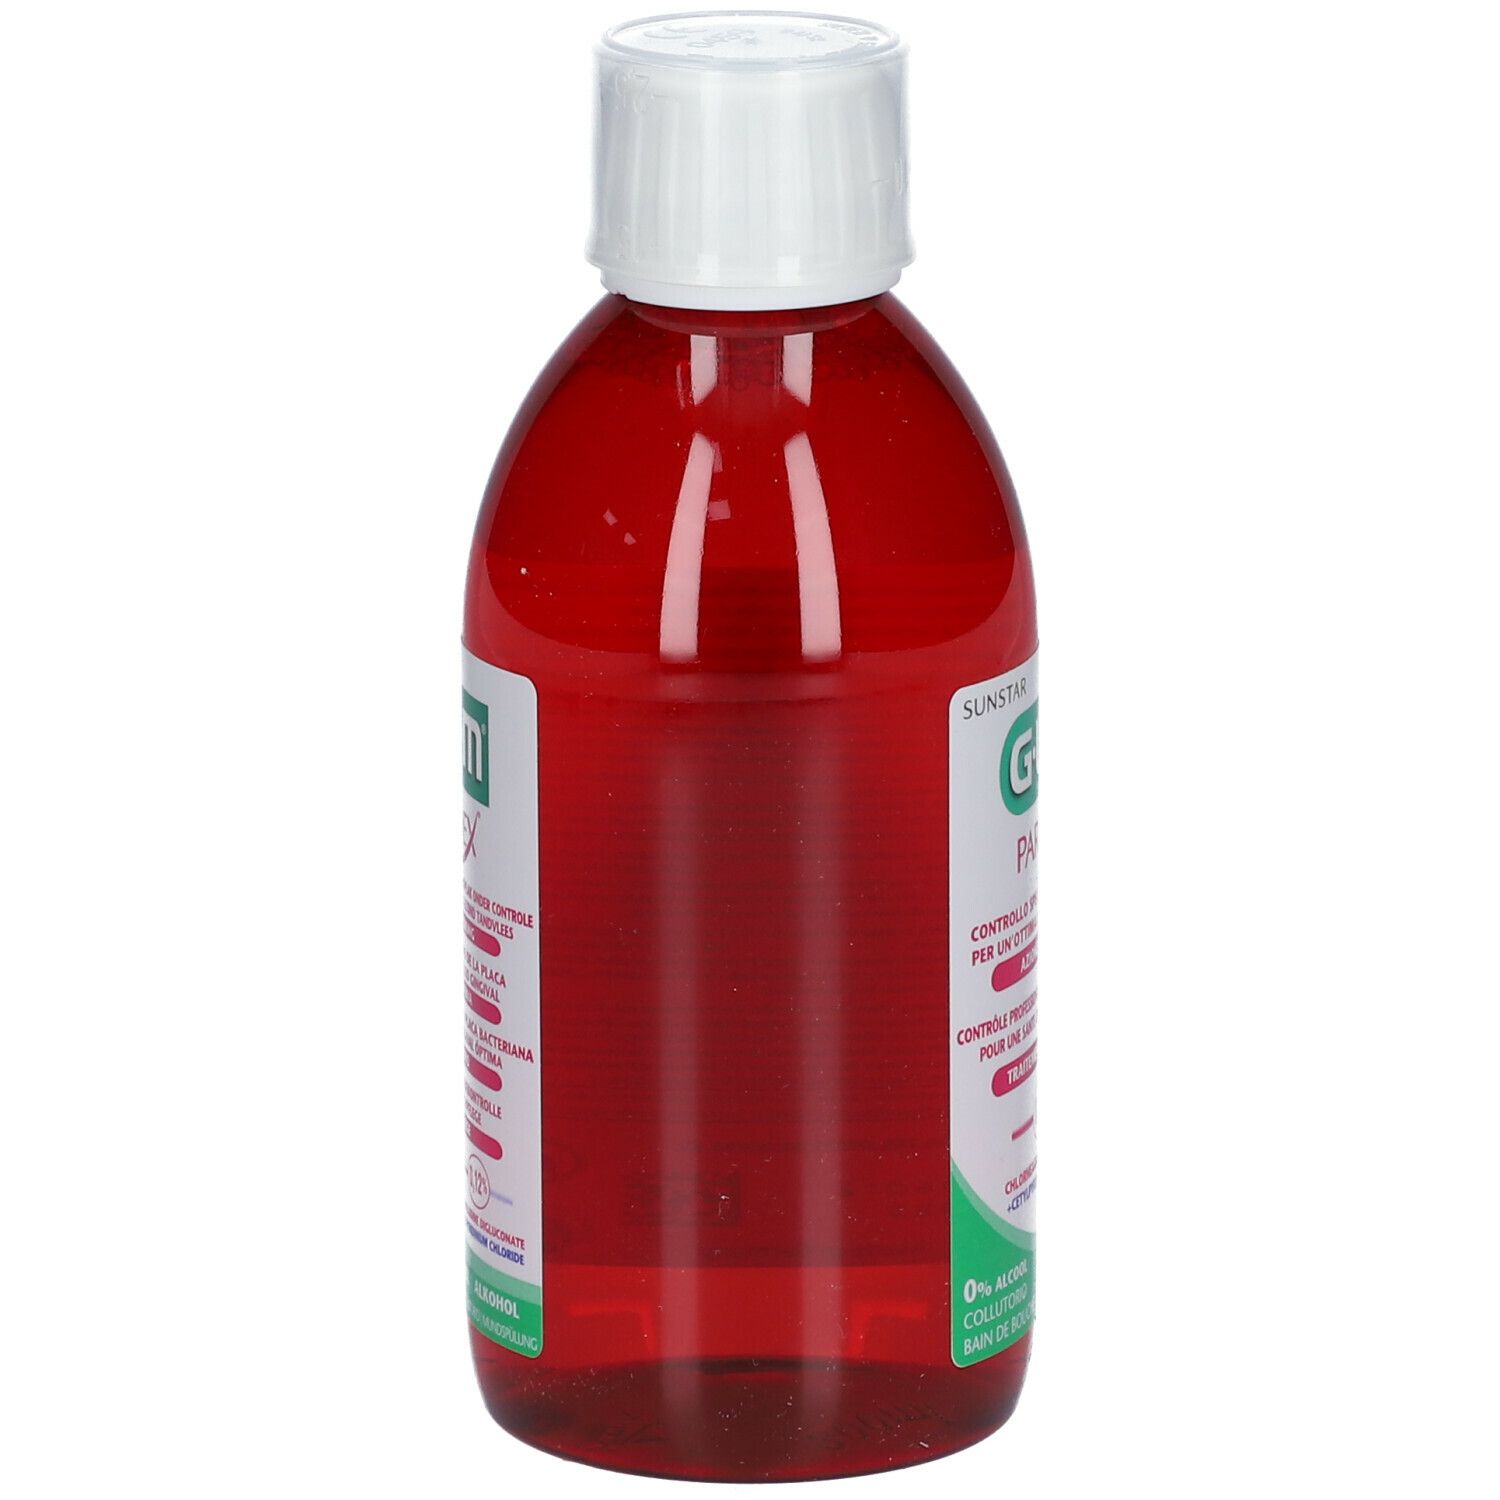 GUM® Paroex® Bain de bouche 0,12% Chlorhexidine